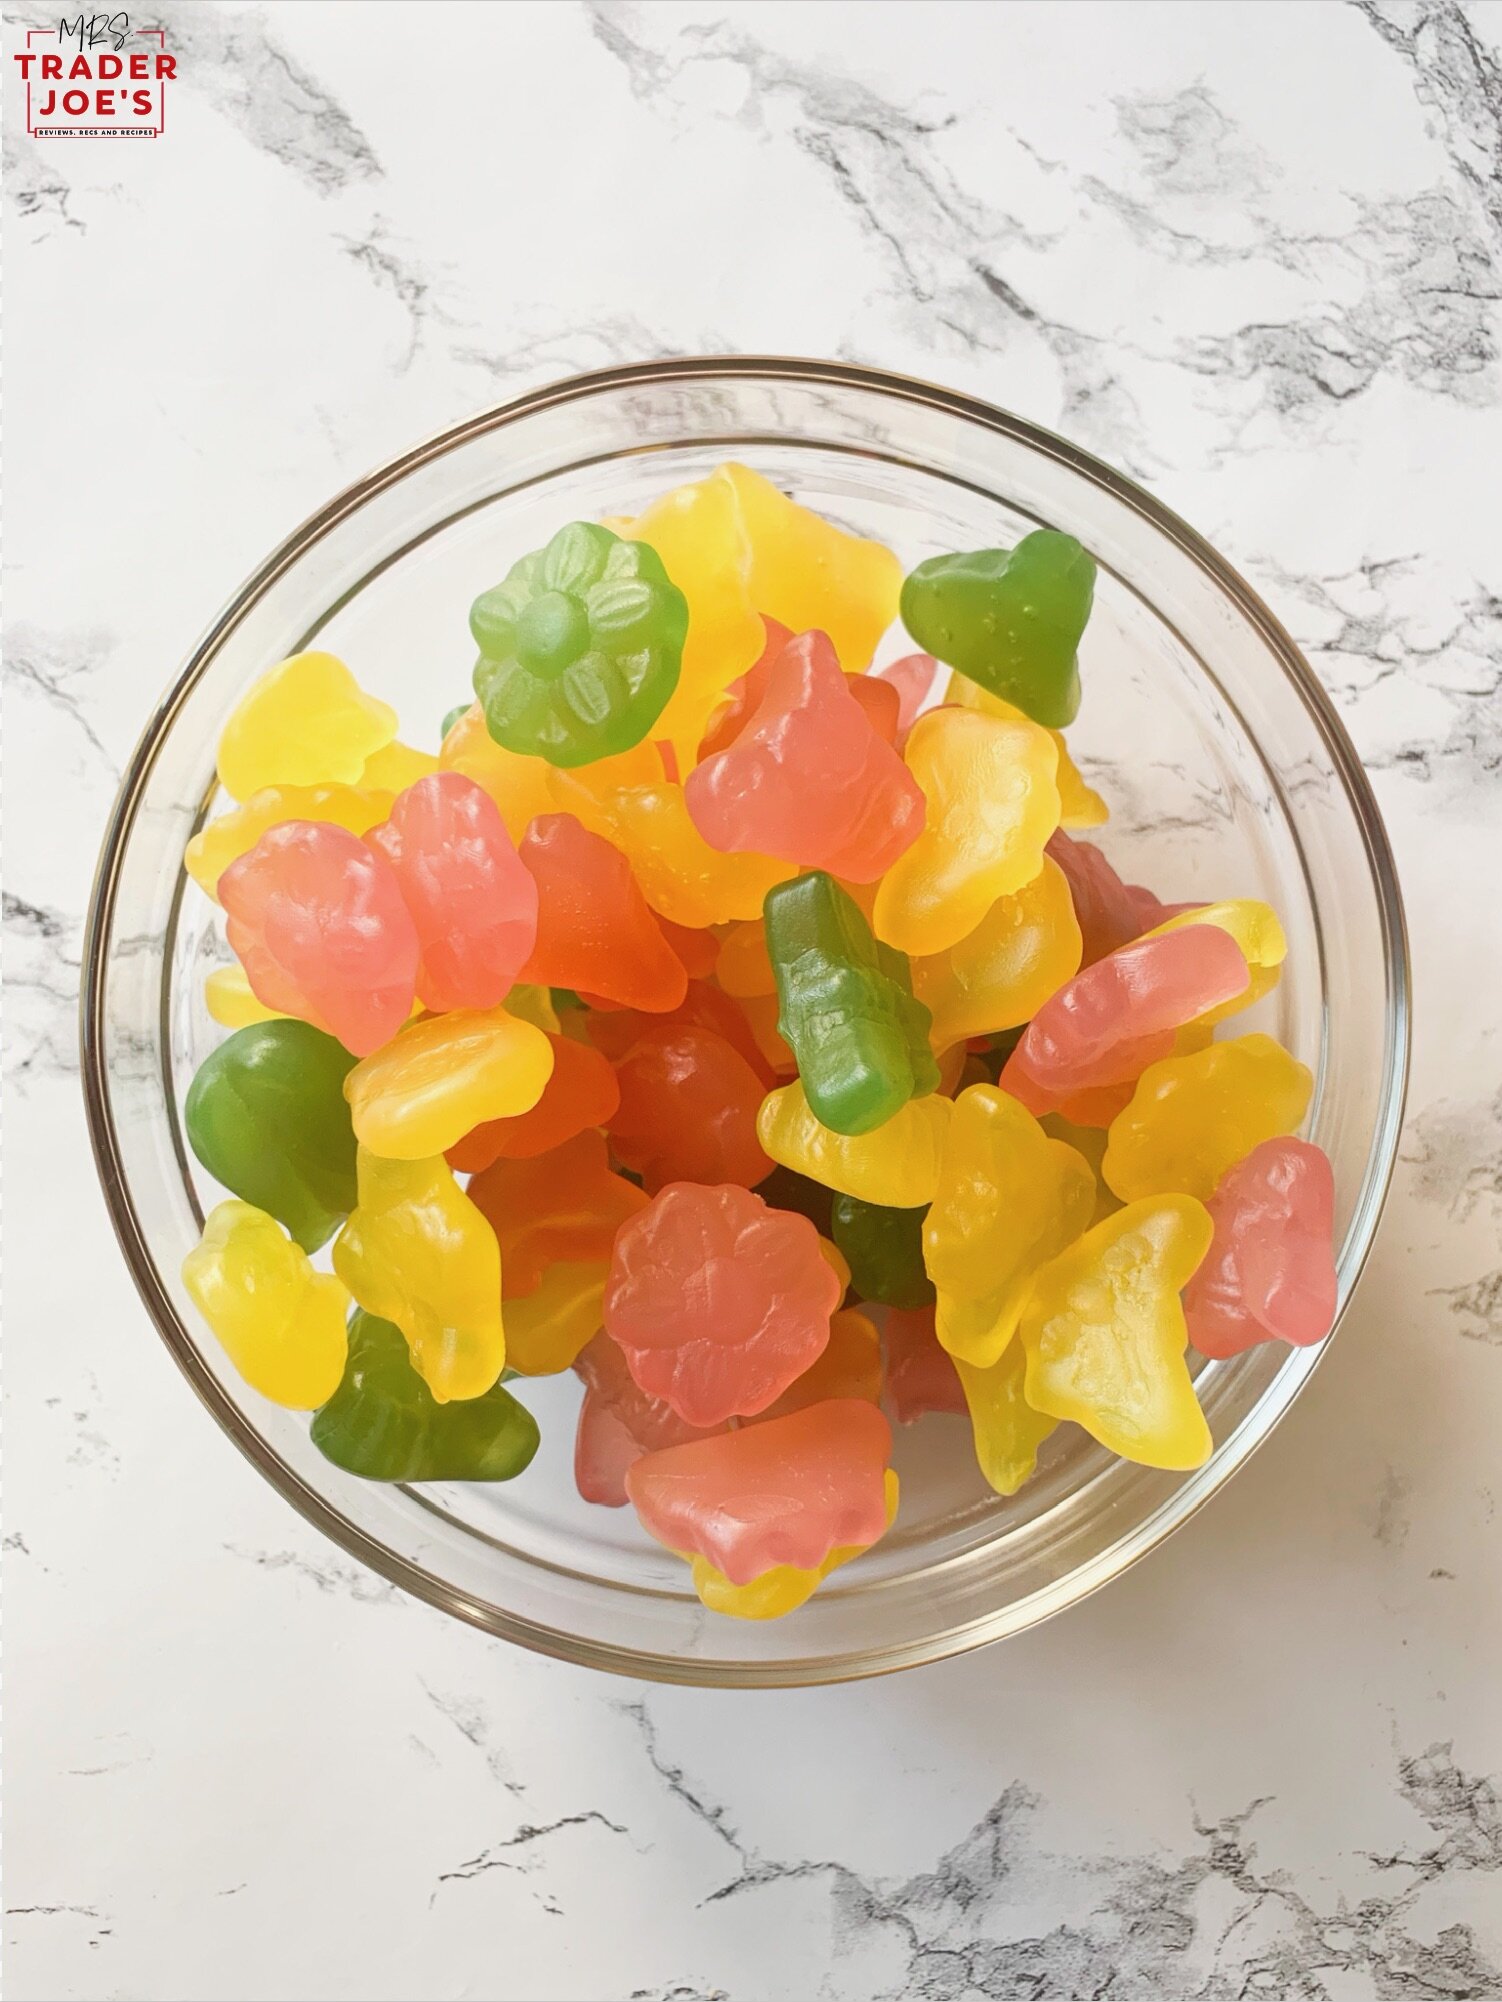 Spring Gummies — Mrs. Trader Joe's